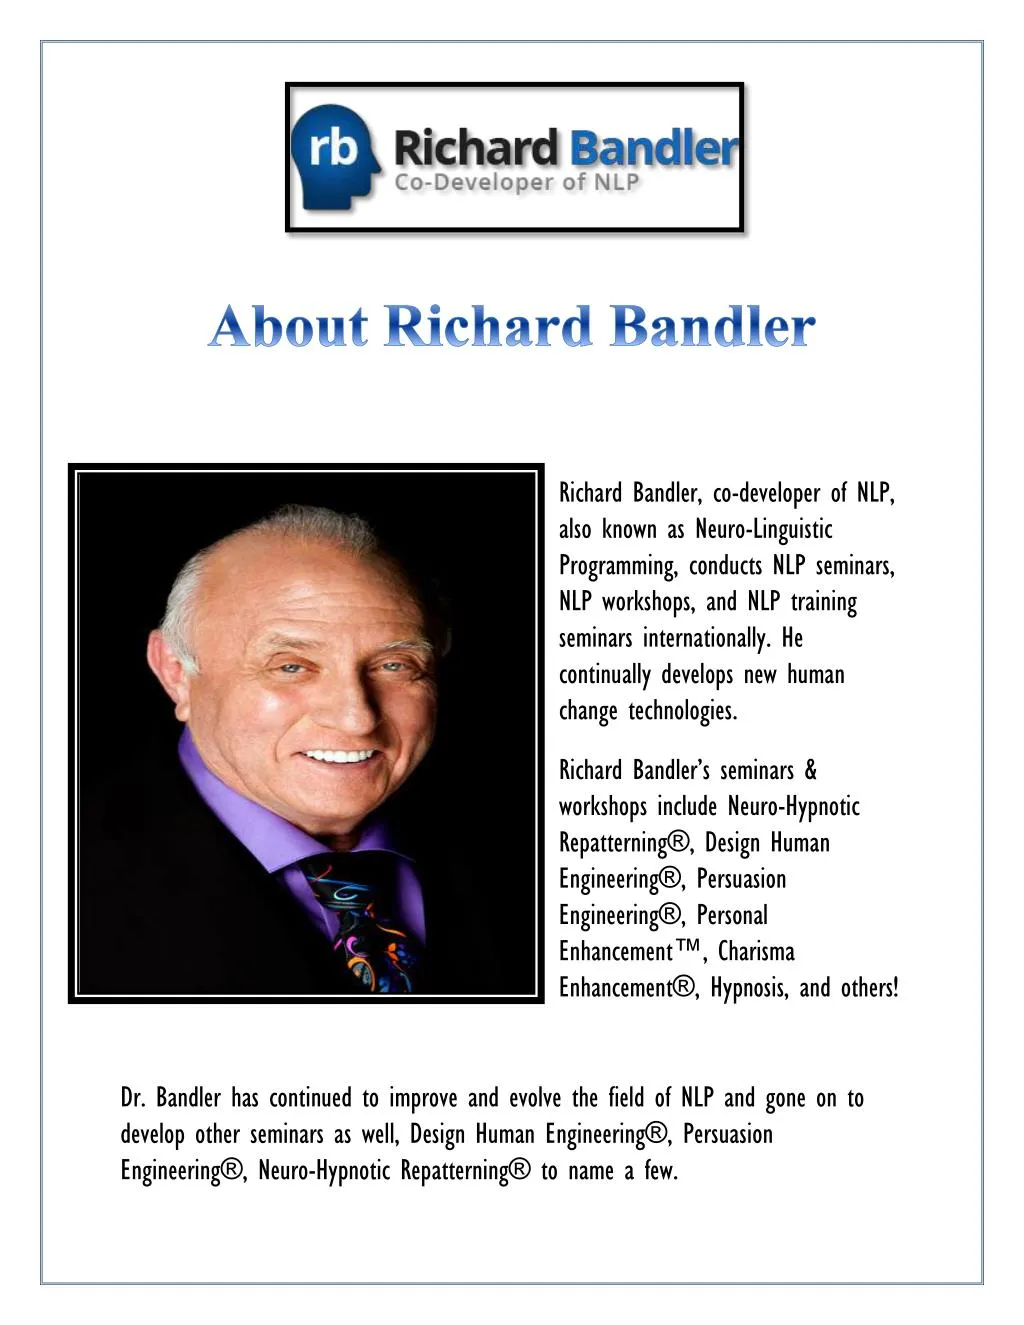 richard bandler co developer of nlp also known